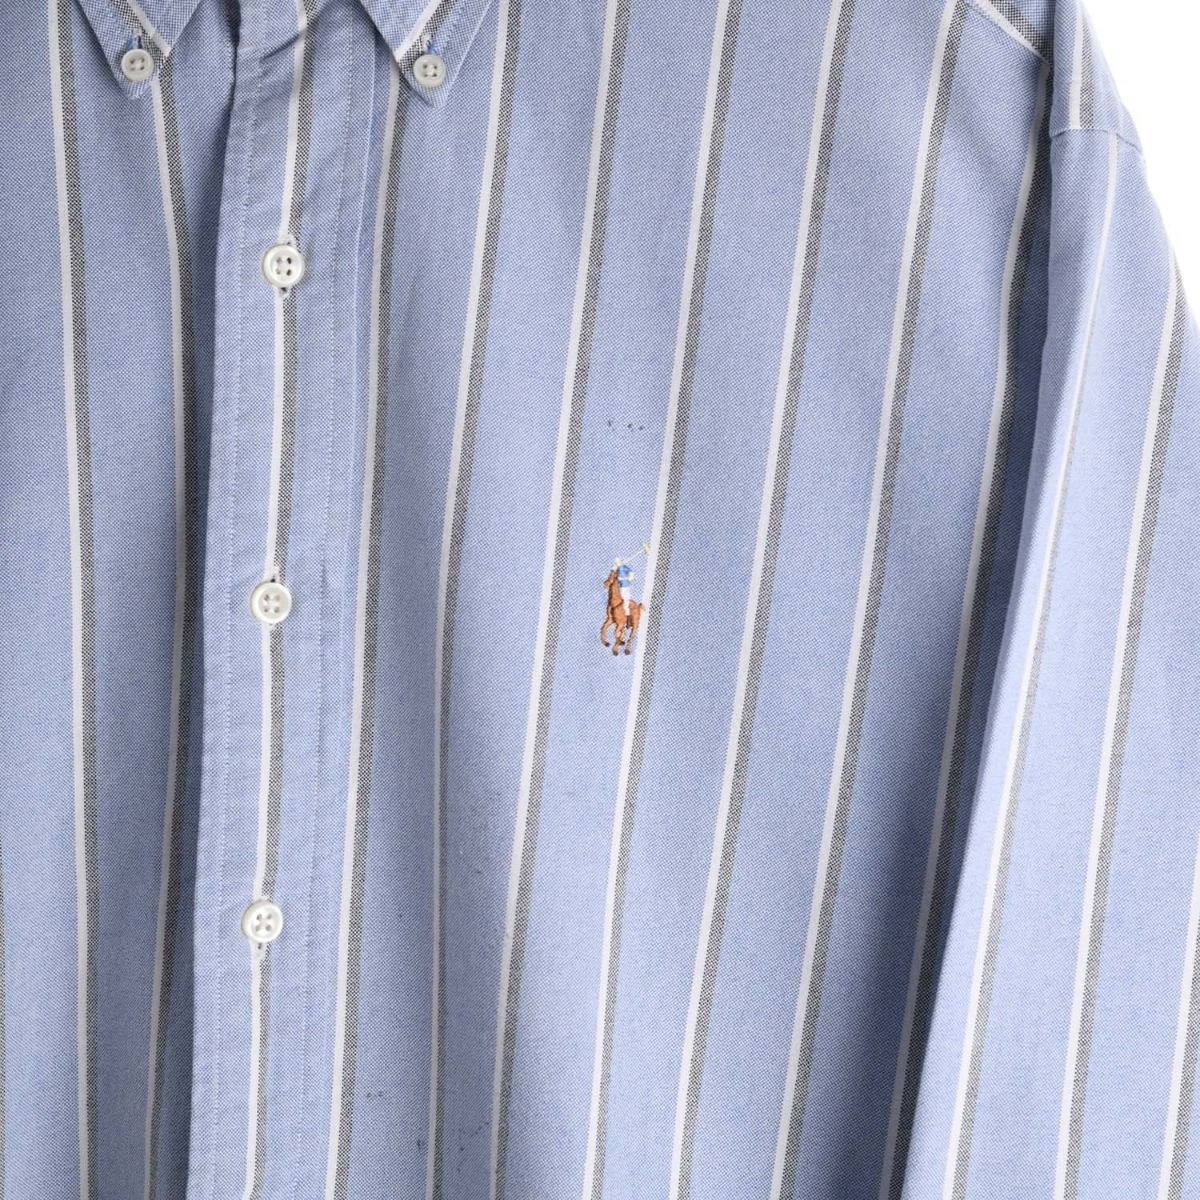 Ralph Lauren Pale Blue Striped Blake Shirt